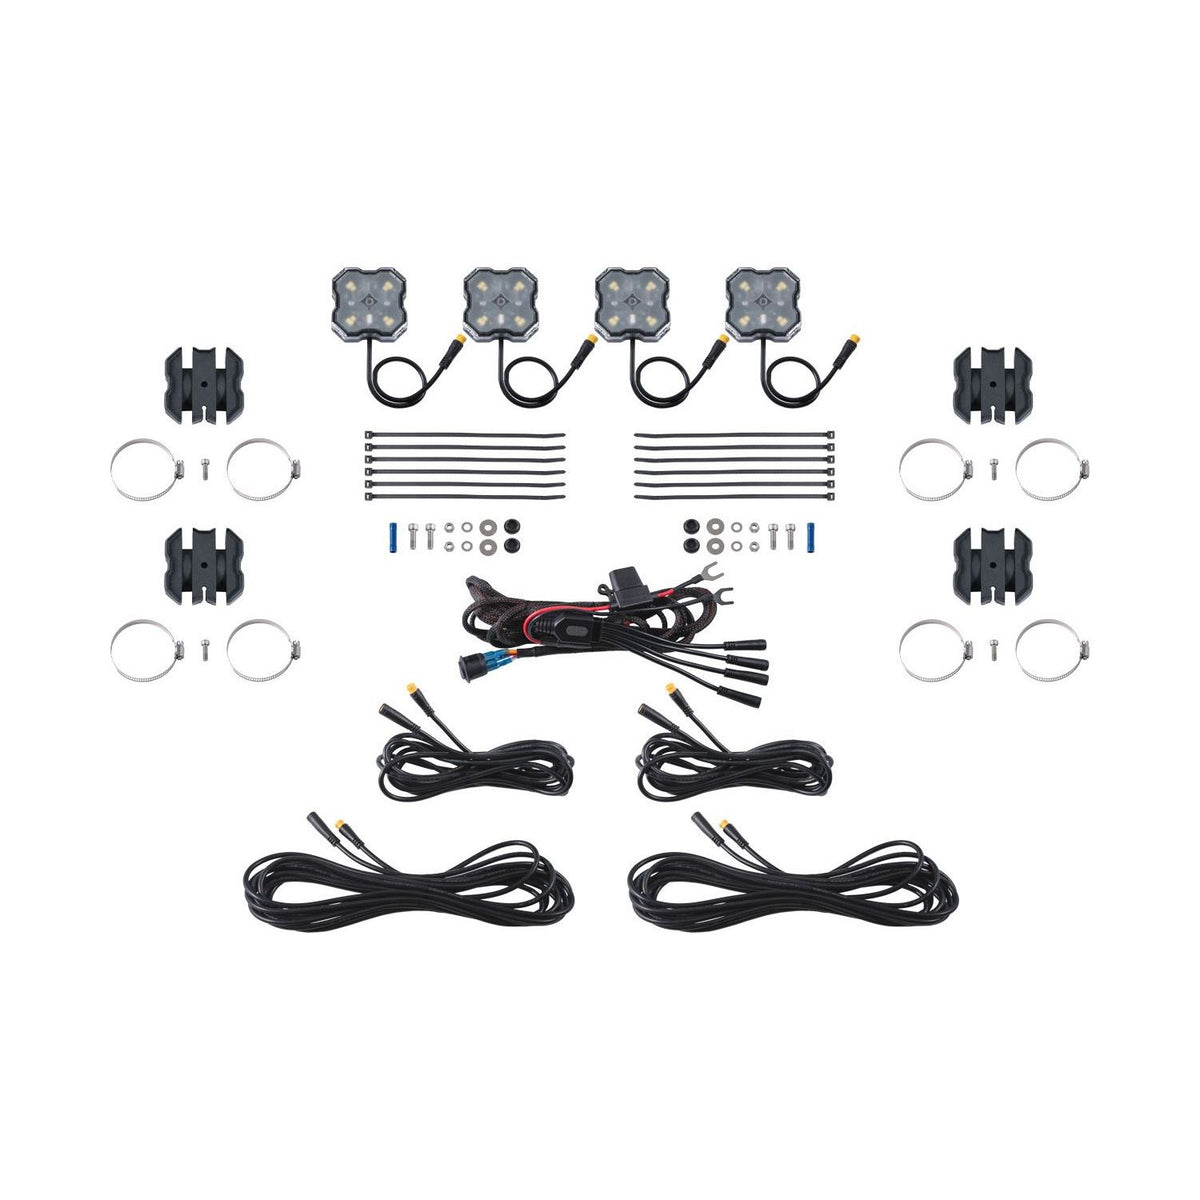 Stage Series Universal Rock Light SXS Installer Kit (4-Pack) | Diode Dynamics